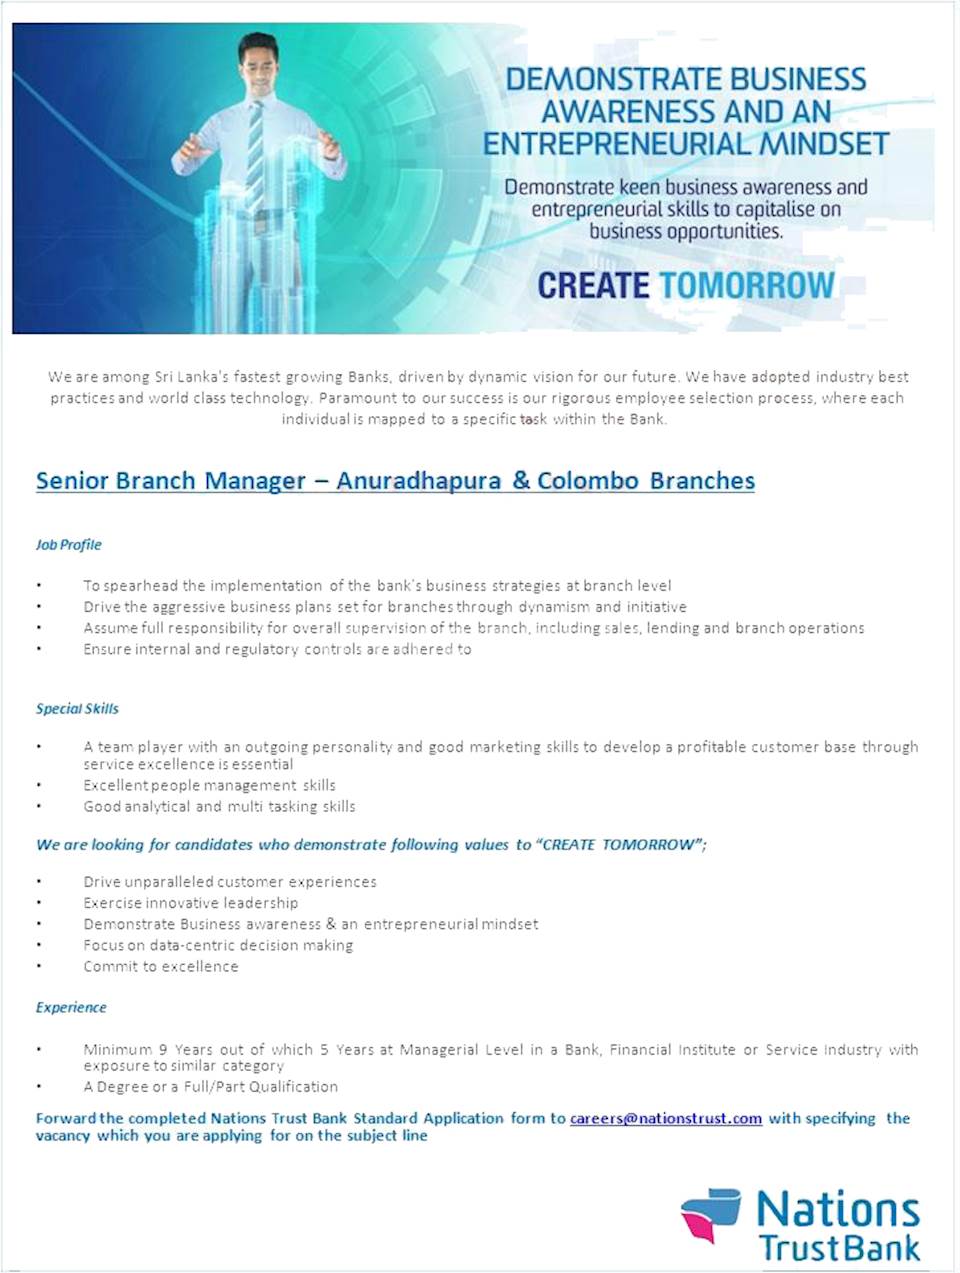 Senior Branch Manager - Anuradhapura & Colombo Branches